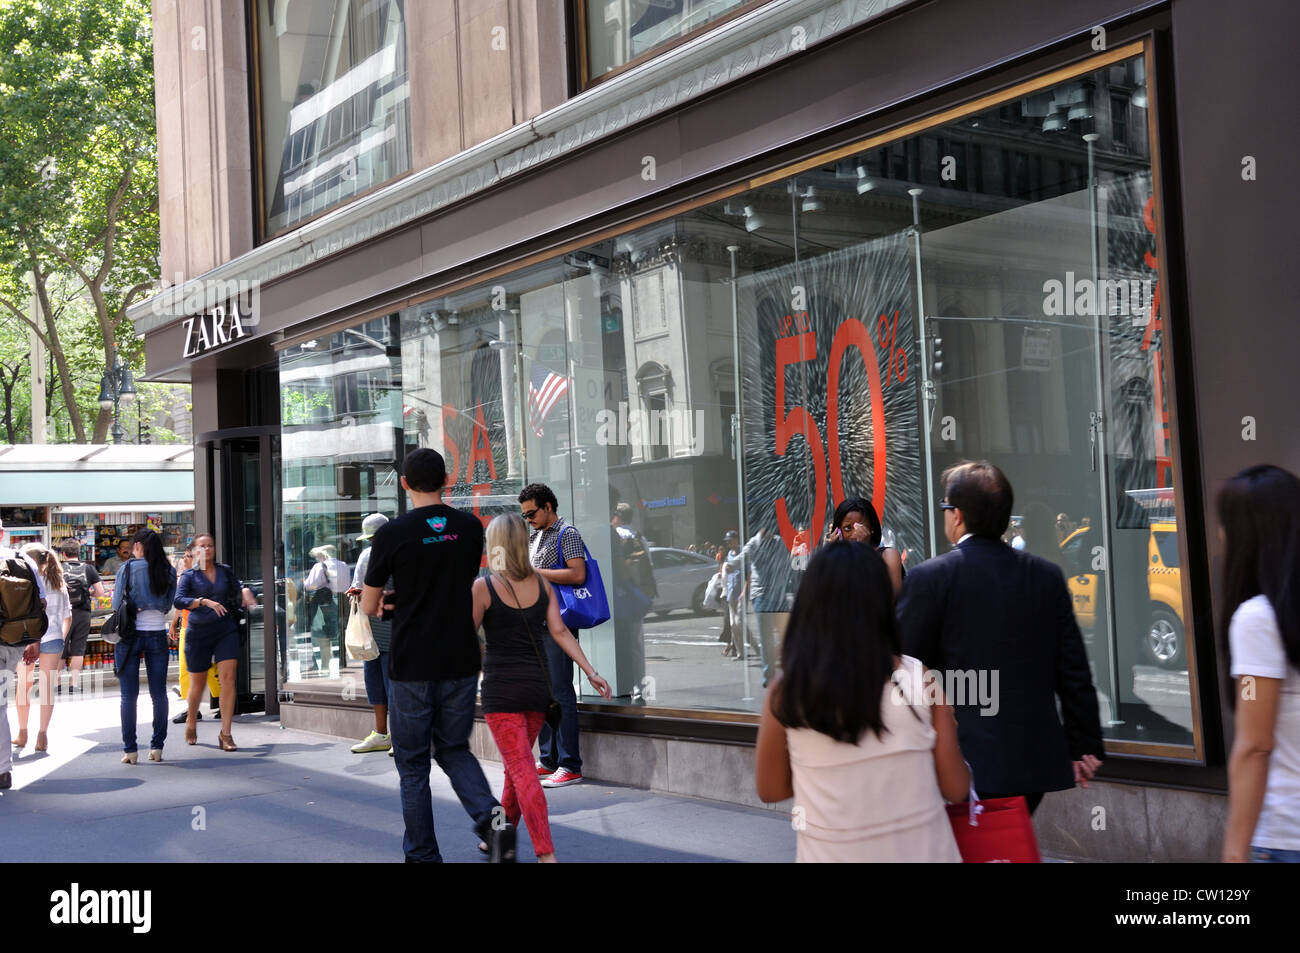 Zara designer fashion store, New York, USA Stock Photo - Alamy